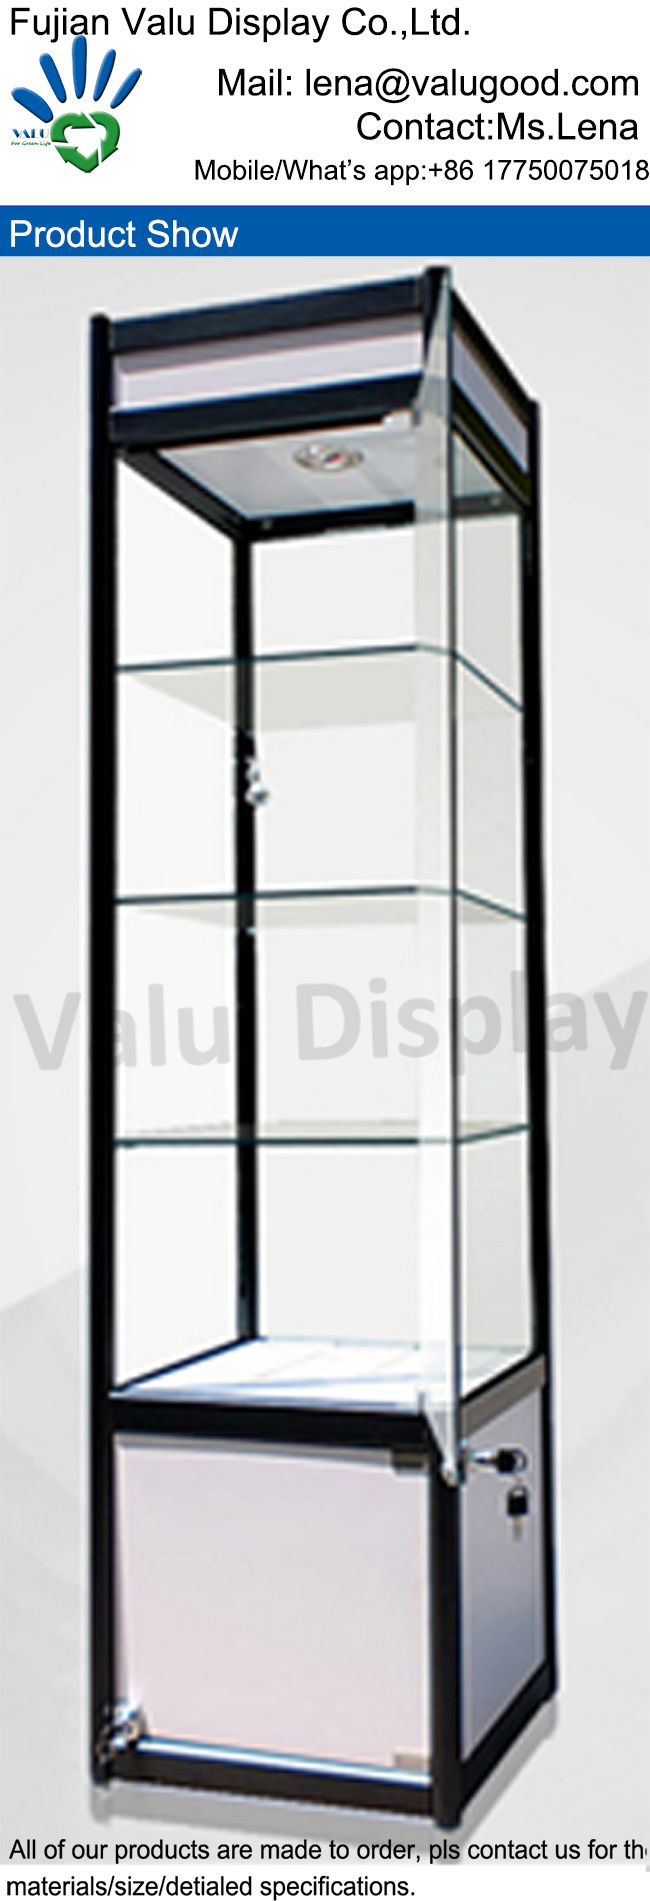 Modern Jewelry Aluminum Glass Display Showcase/Lockable Glass Vitrine Showcase Display Cabinet